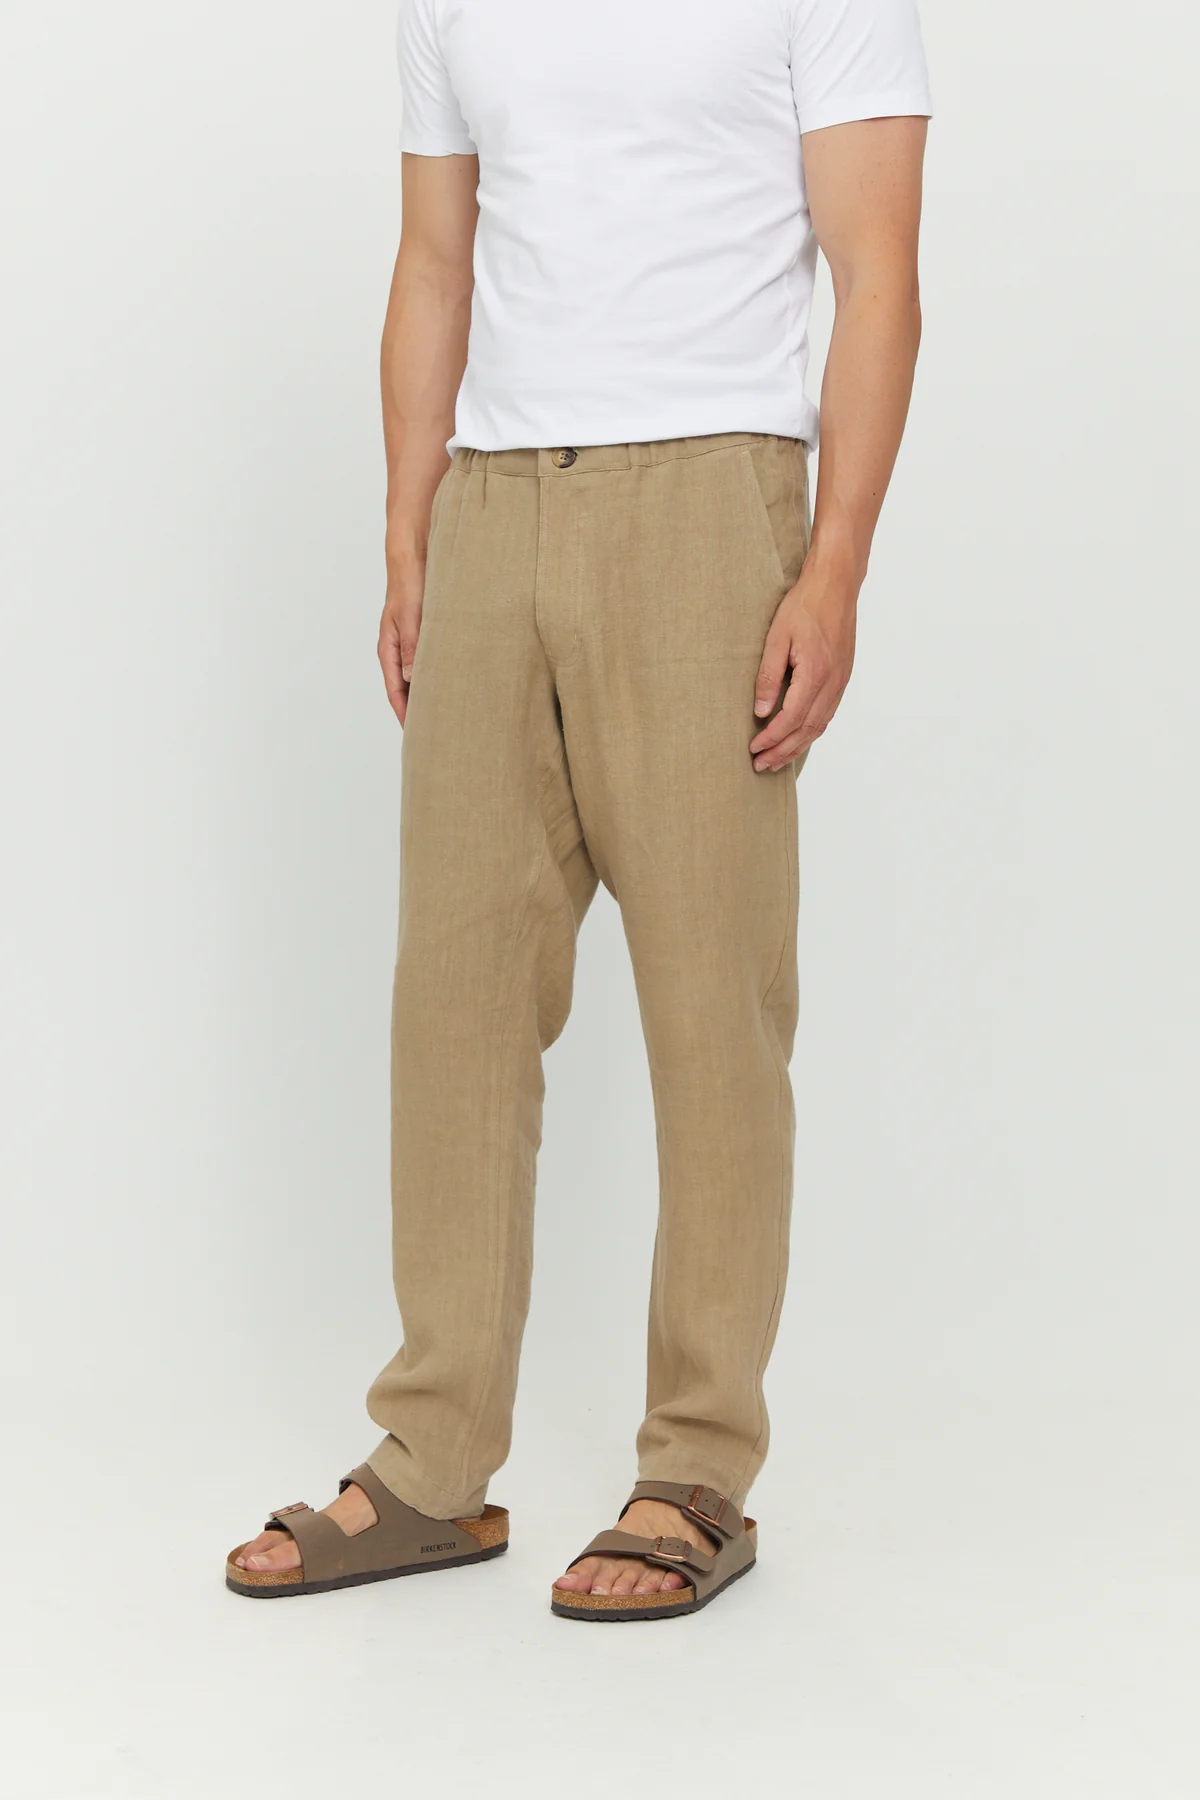 Mazine Littlefield Linen Pants - Sandy Olive